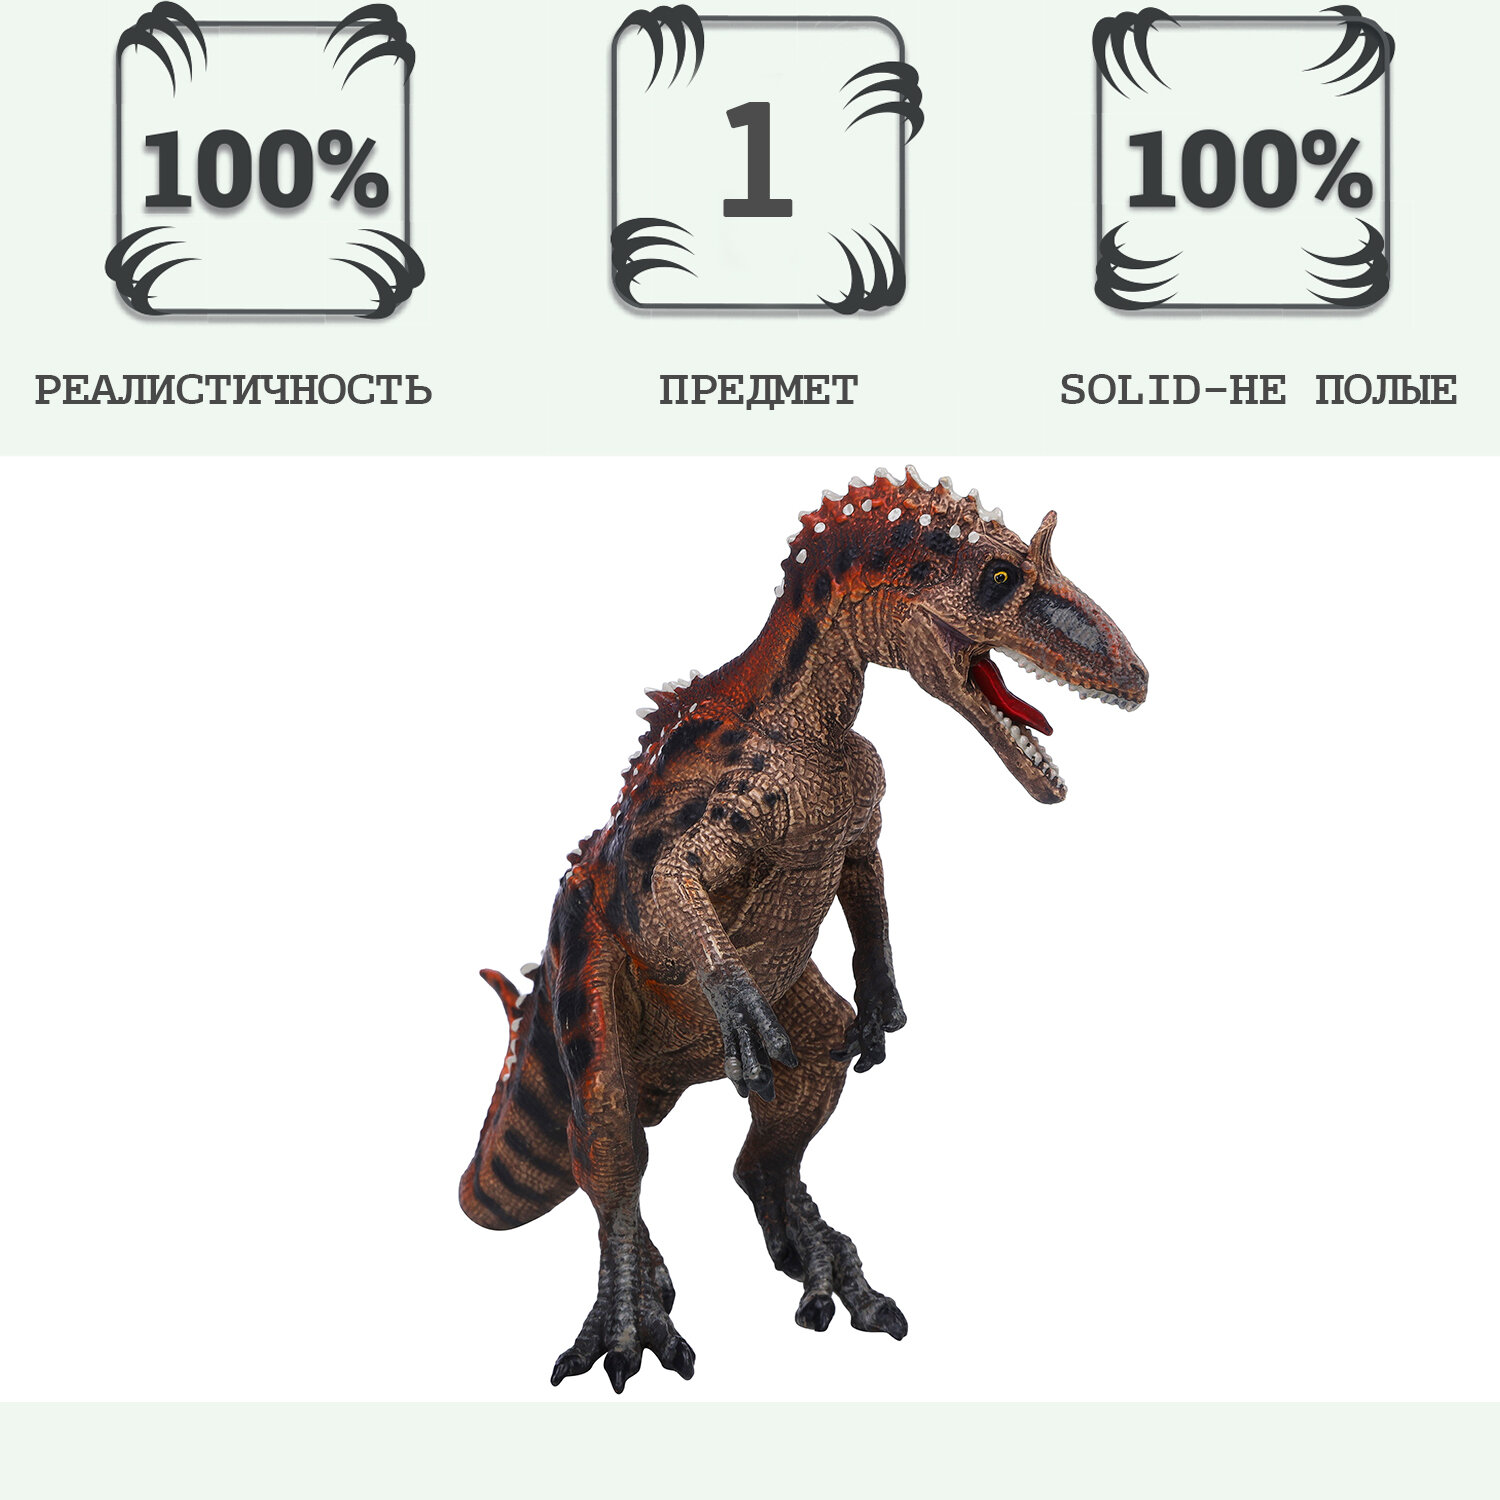 Игрушка динозавр серии "Мир динозавров" - Фигурка Аллозавр